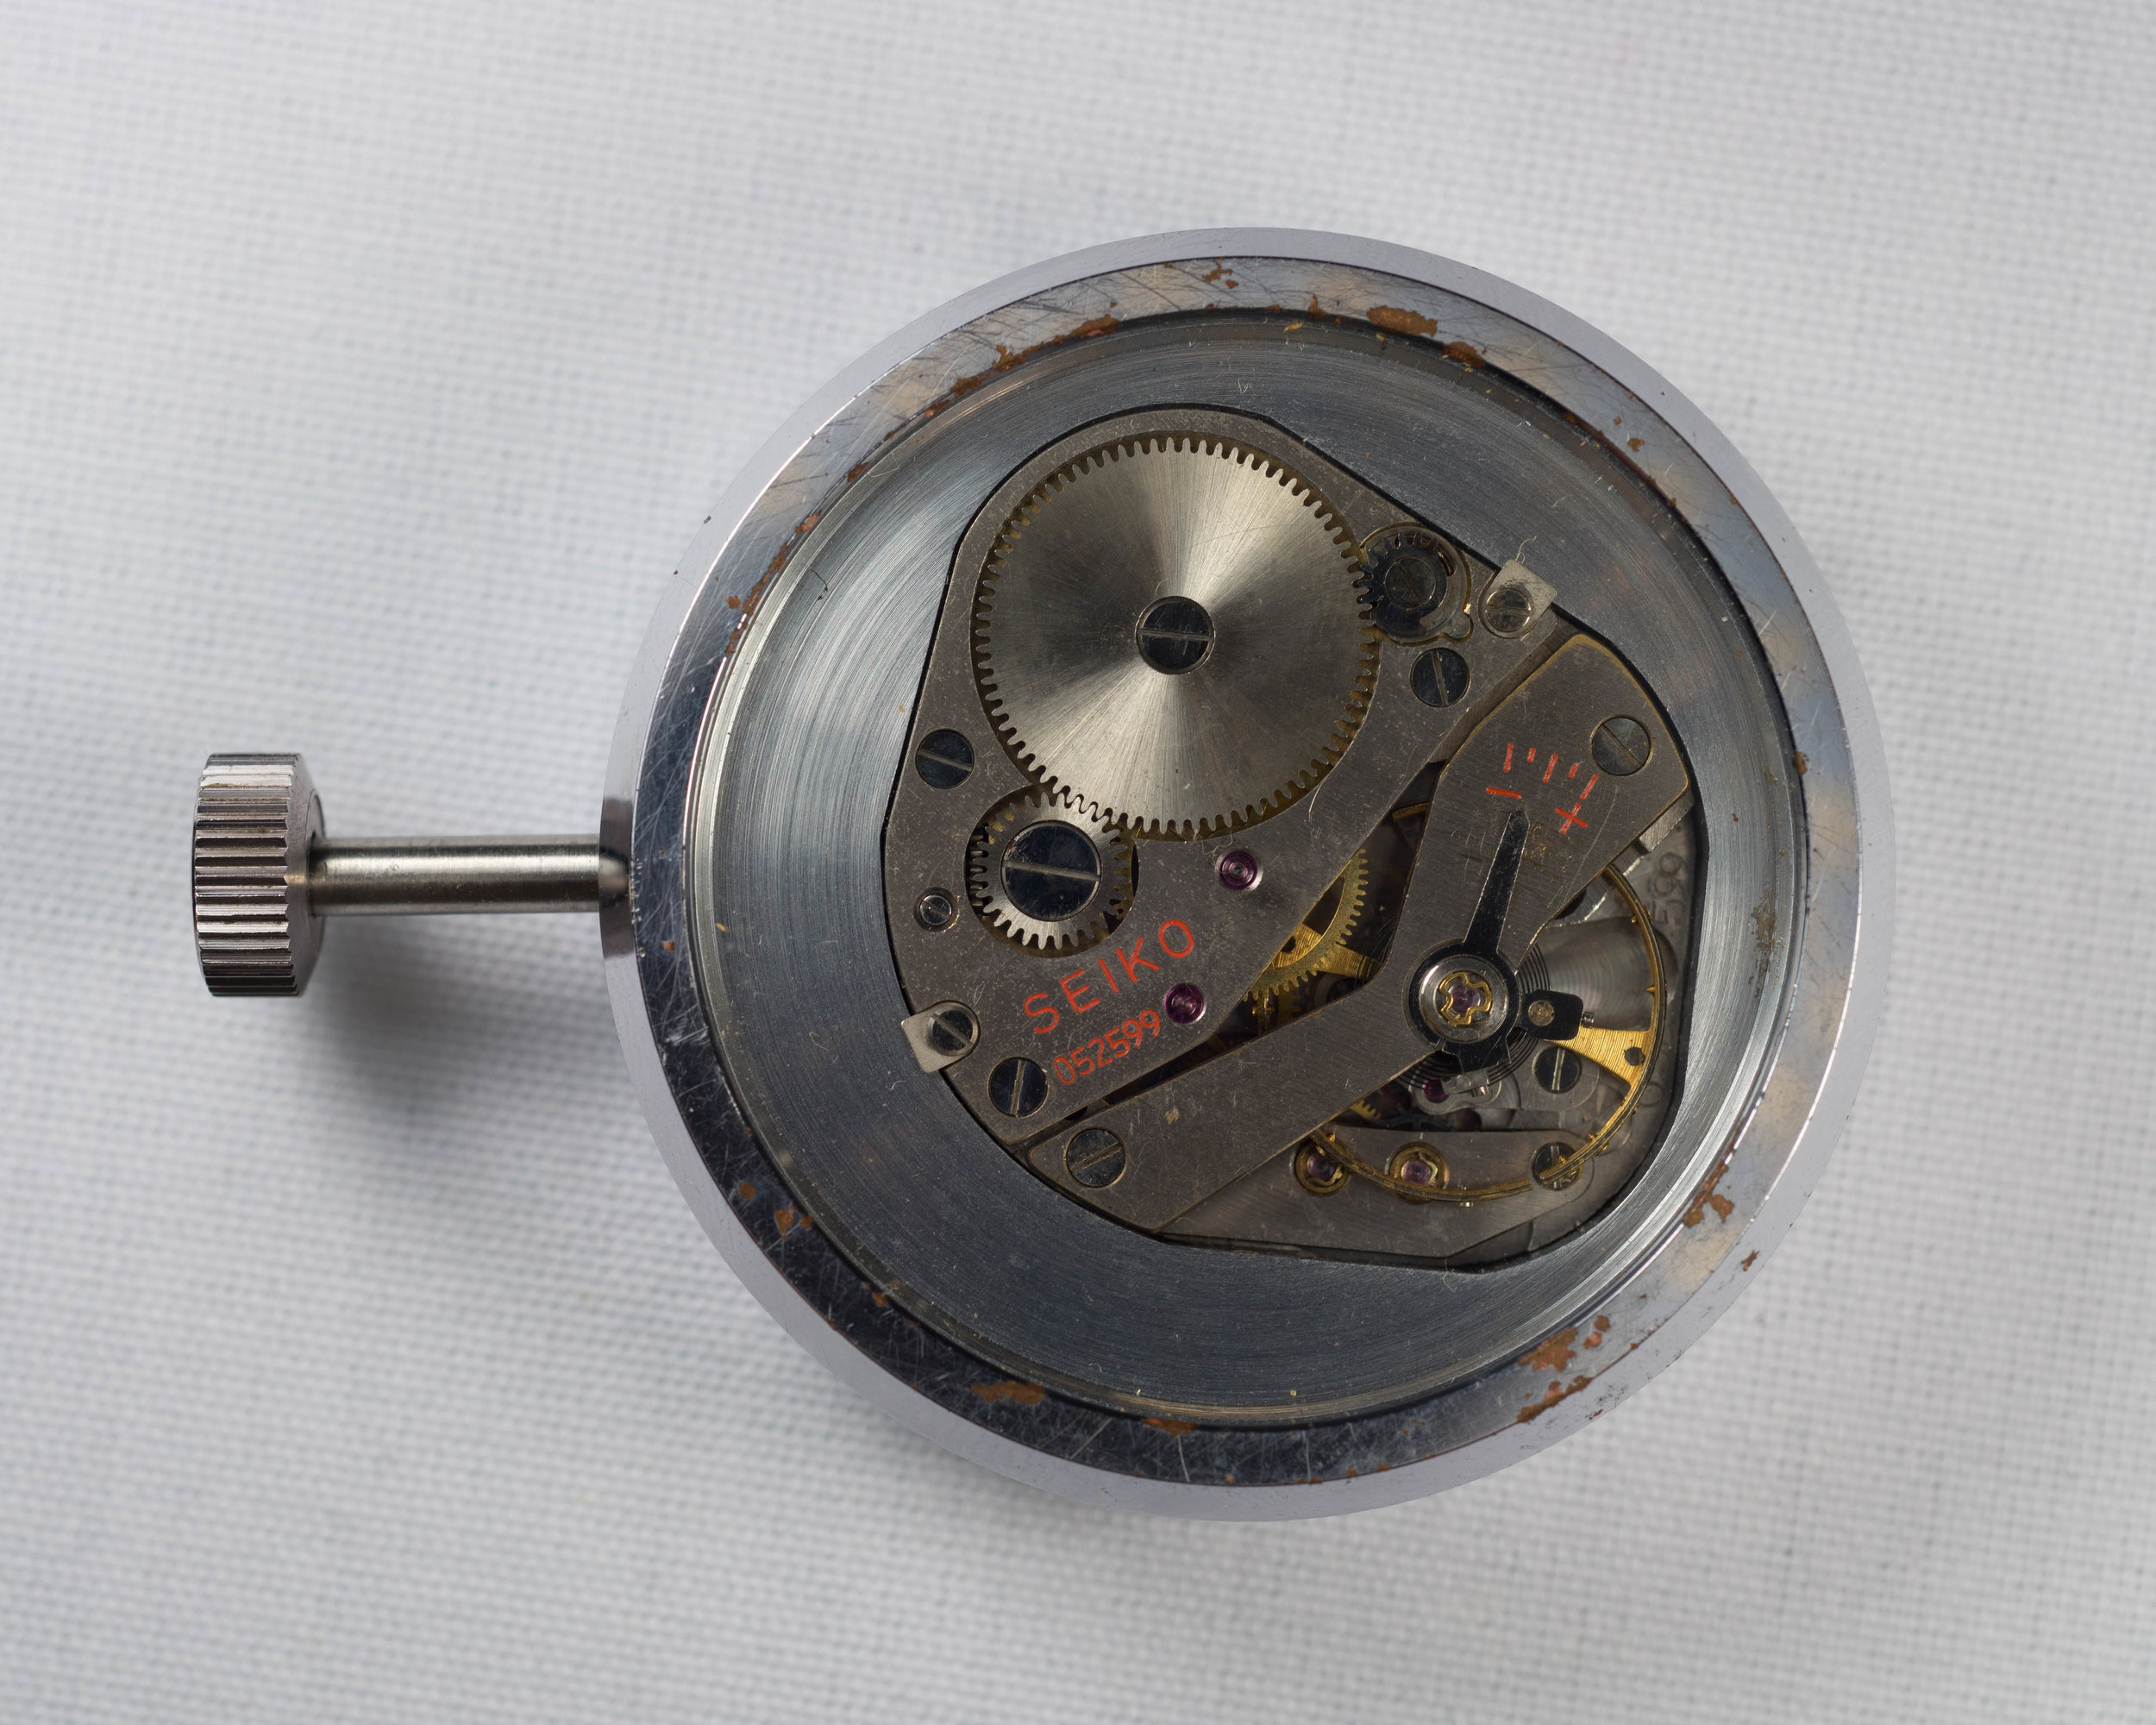 Creation NEUCHATEL 17 RUBIS watch - Swiss Made - Muški sat oko 1950.